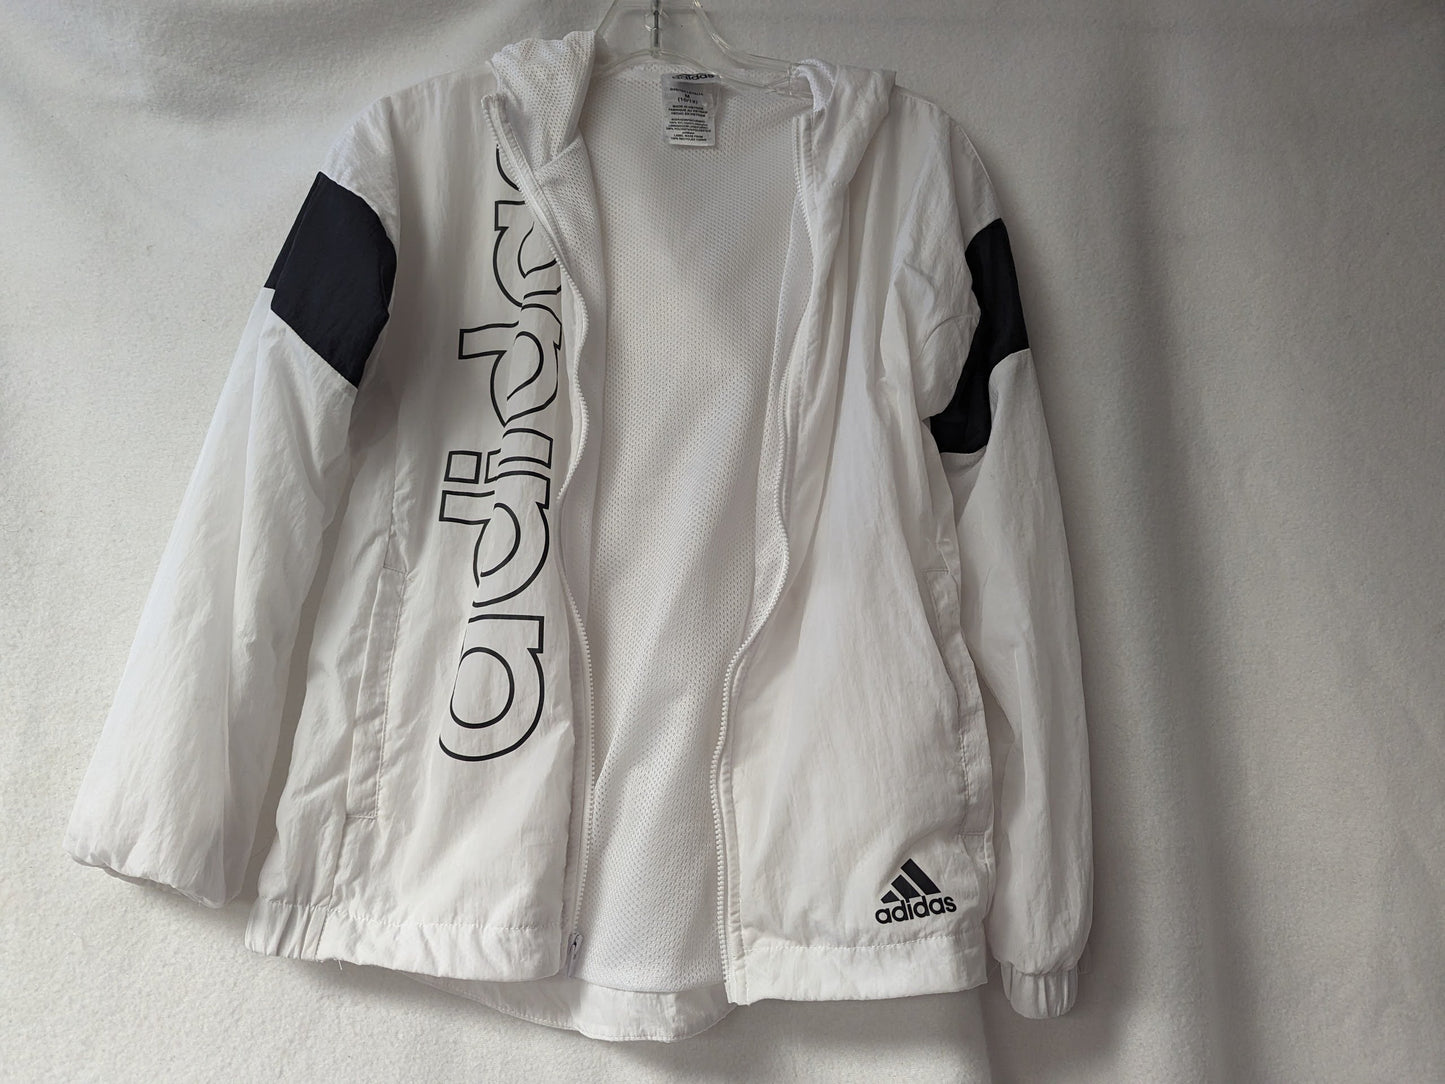 Adidas Hooded Youth Warm up Jacket Coat Size Youth Medium Color White Condition Used